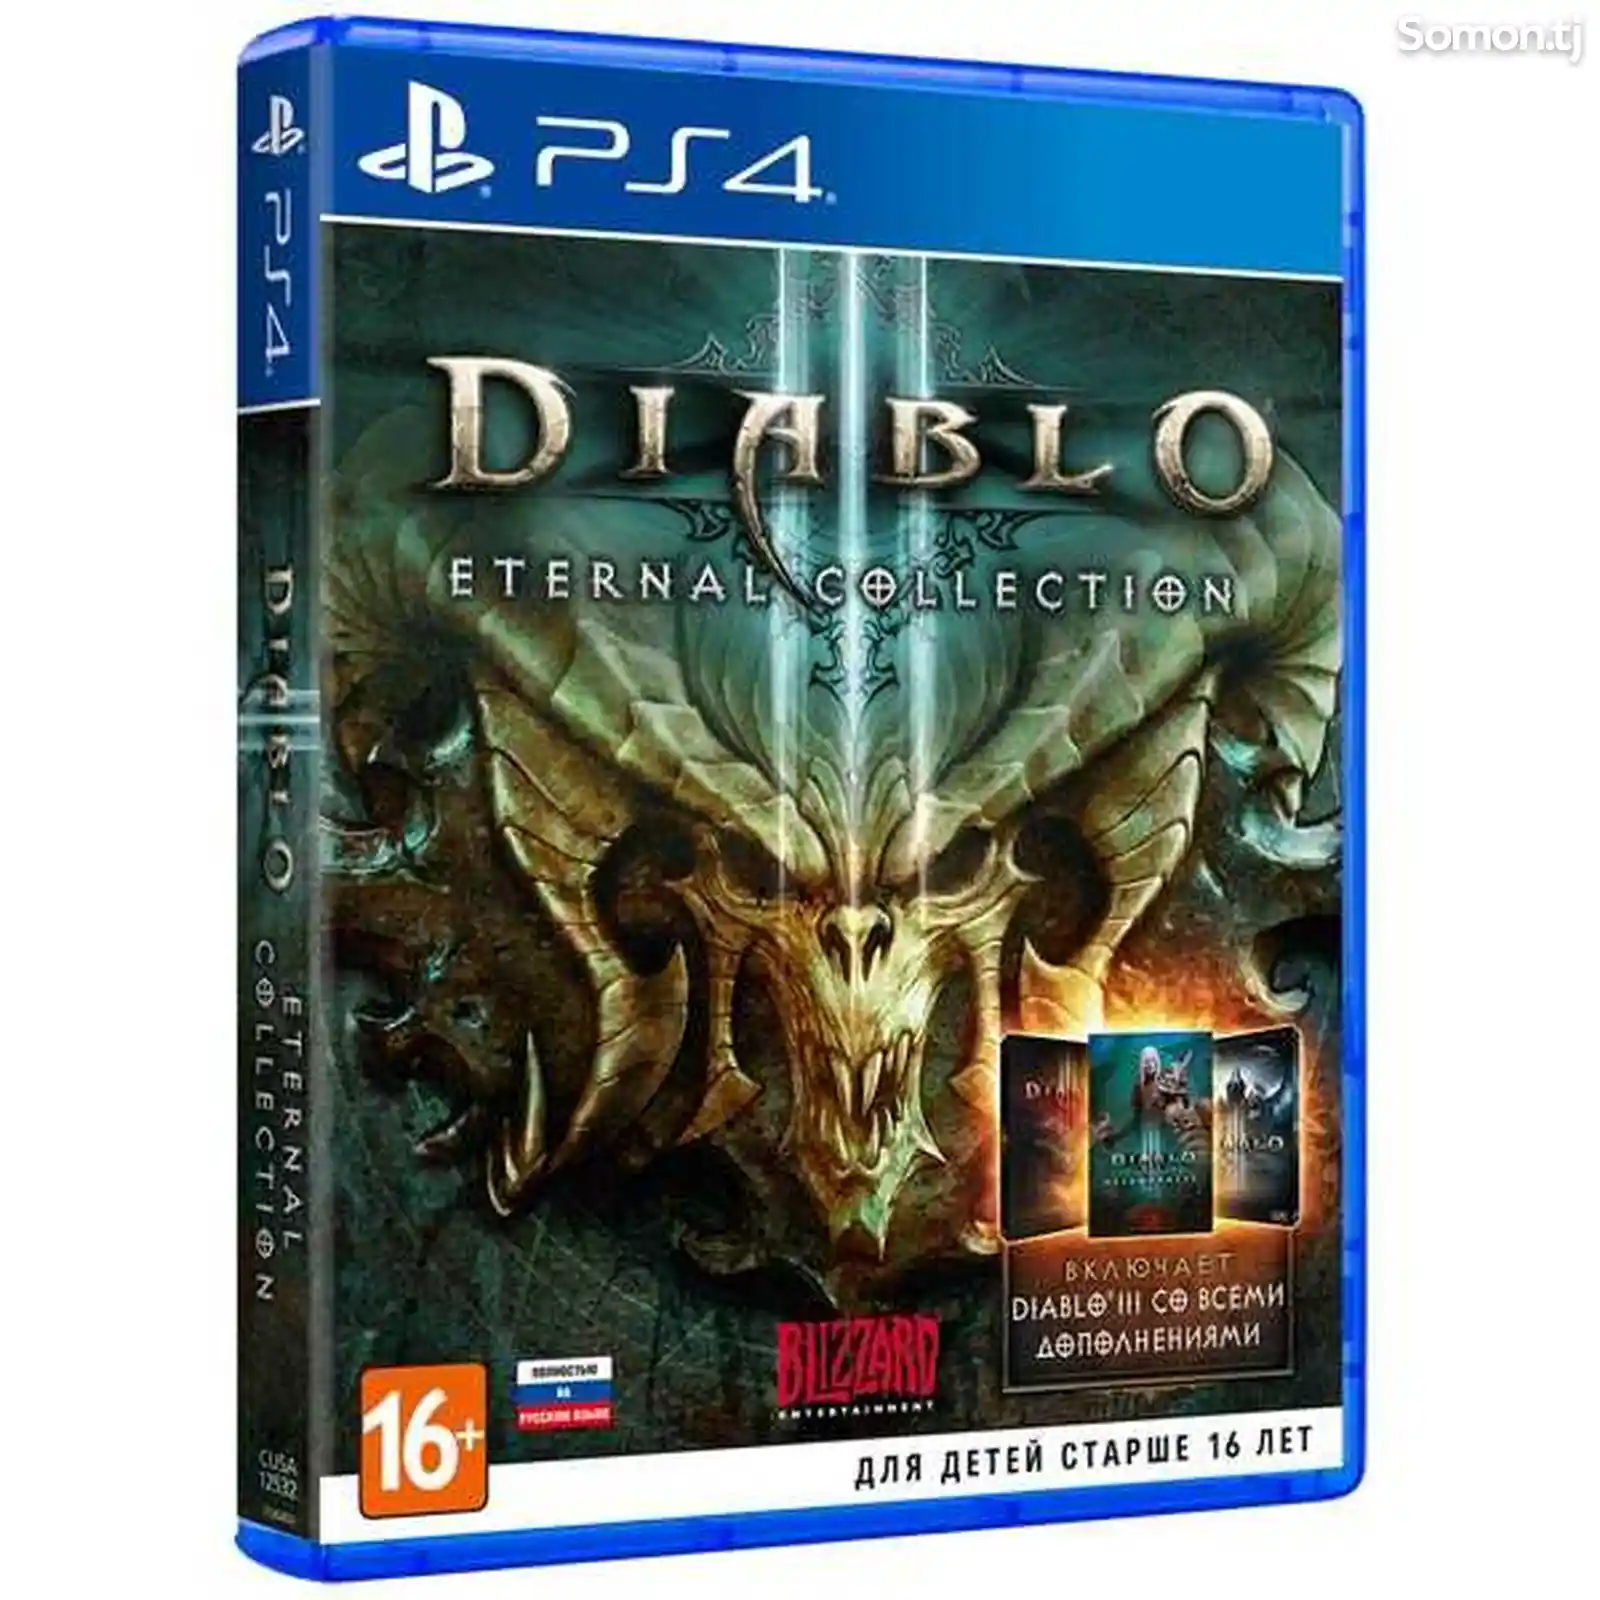 Игра Blizzard Diablo III Eternal Collection для Sony PS4-1